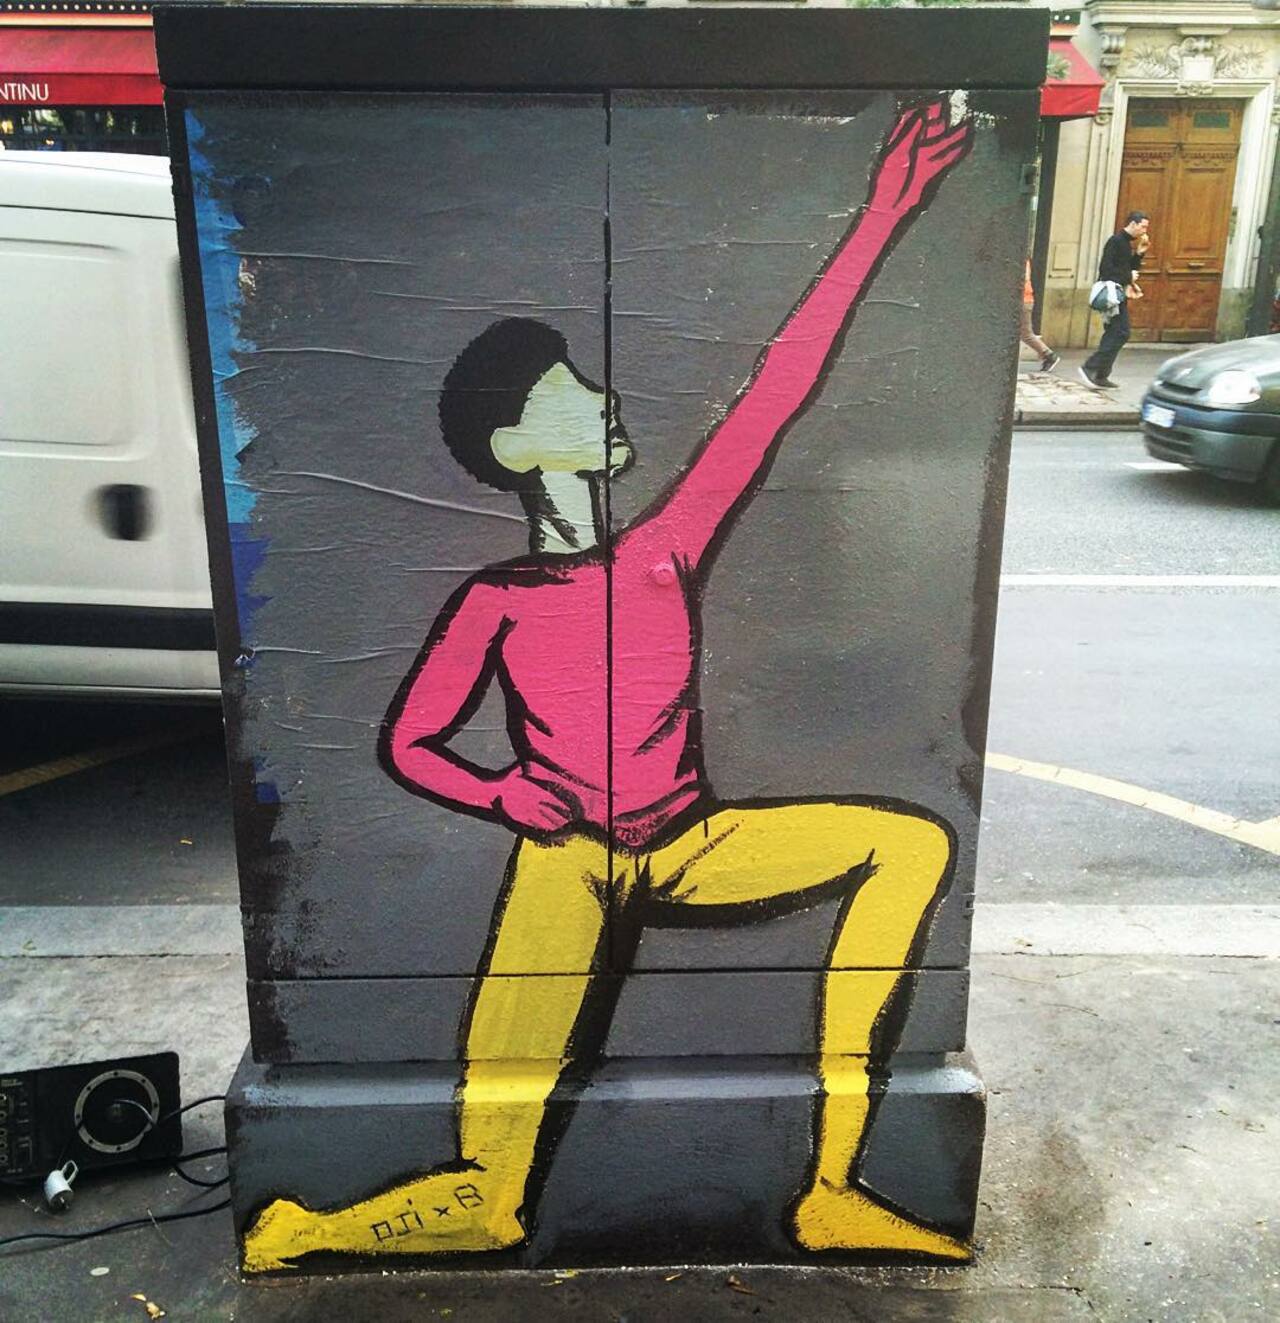 #Paris #graffiti photo by @julosteart http://ift.tt/1jrO7AH #StreetArt http://t.co/qsbGgMeLjU